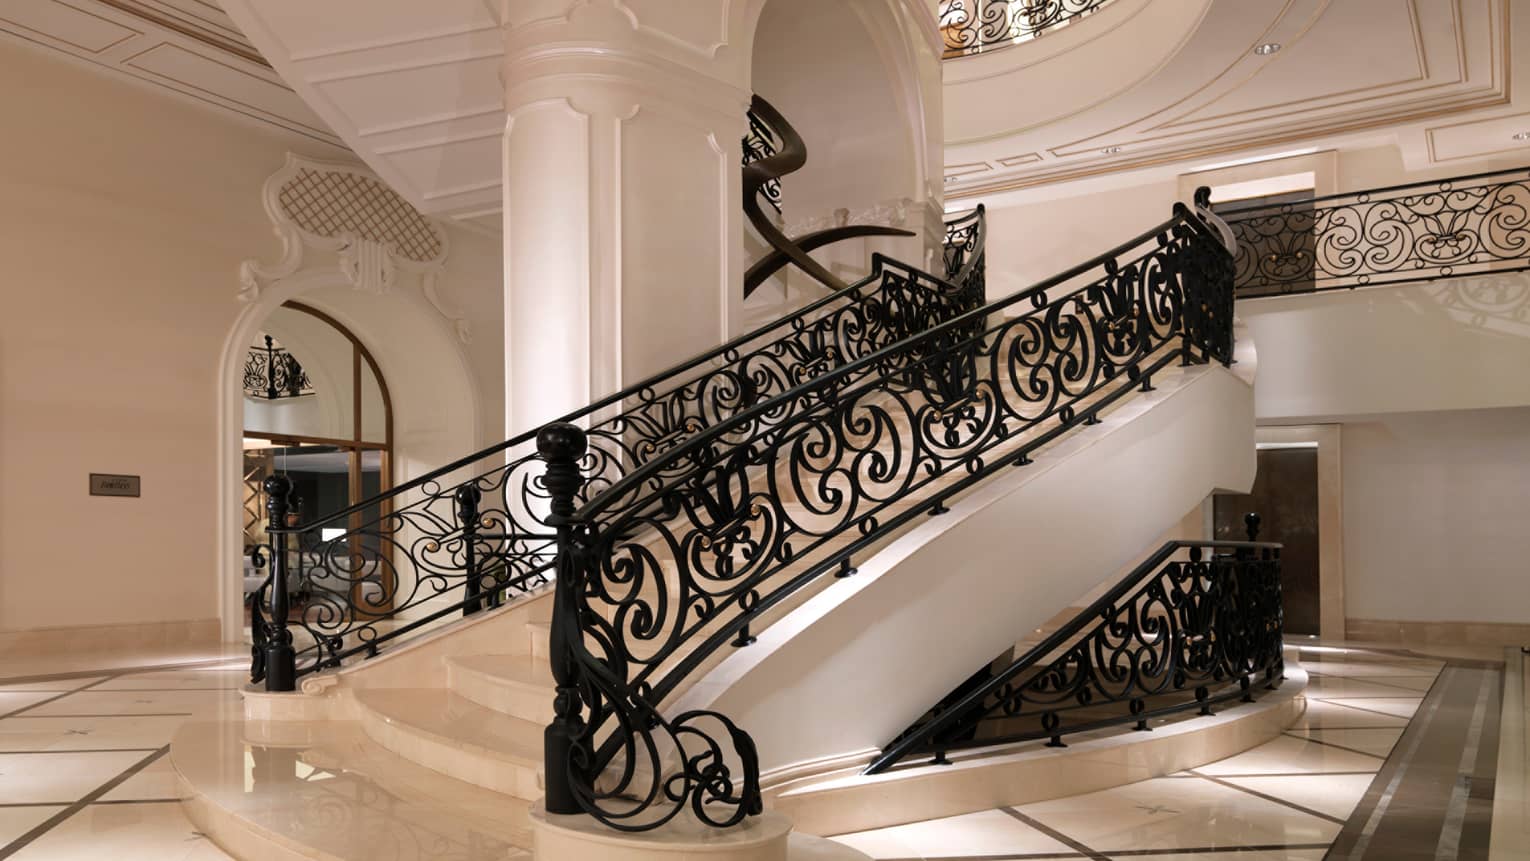 Hotel Beaux-Arts style white staircase with decorative black railings, white pillar, white tile floor